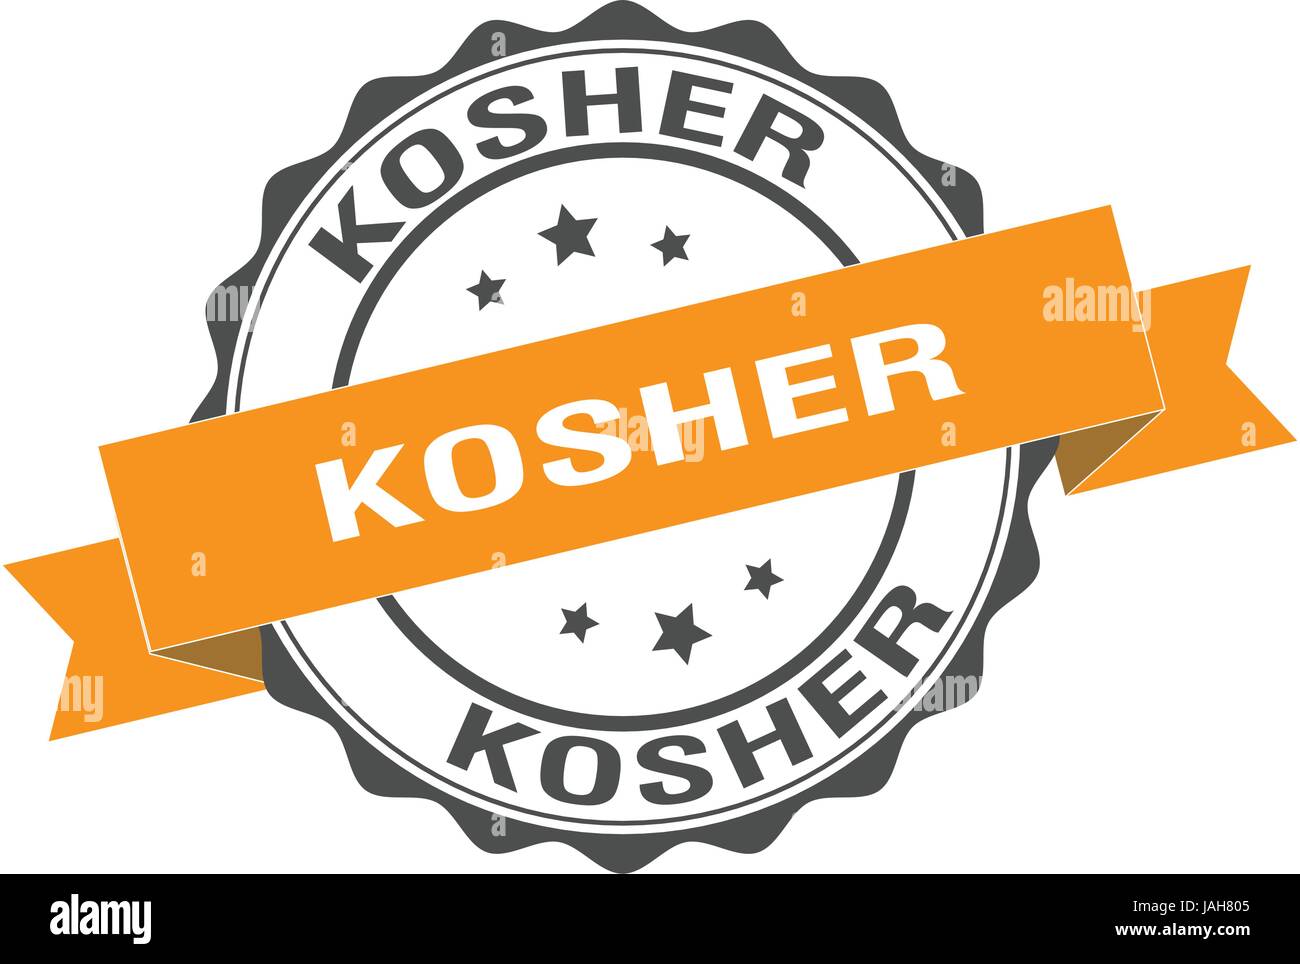 Kosher stamp illustration Stock Vector